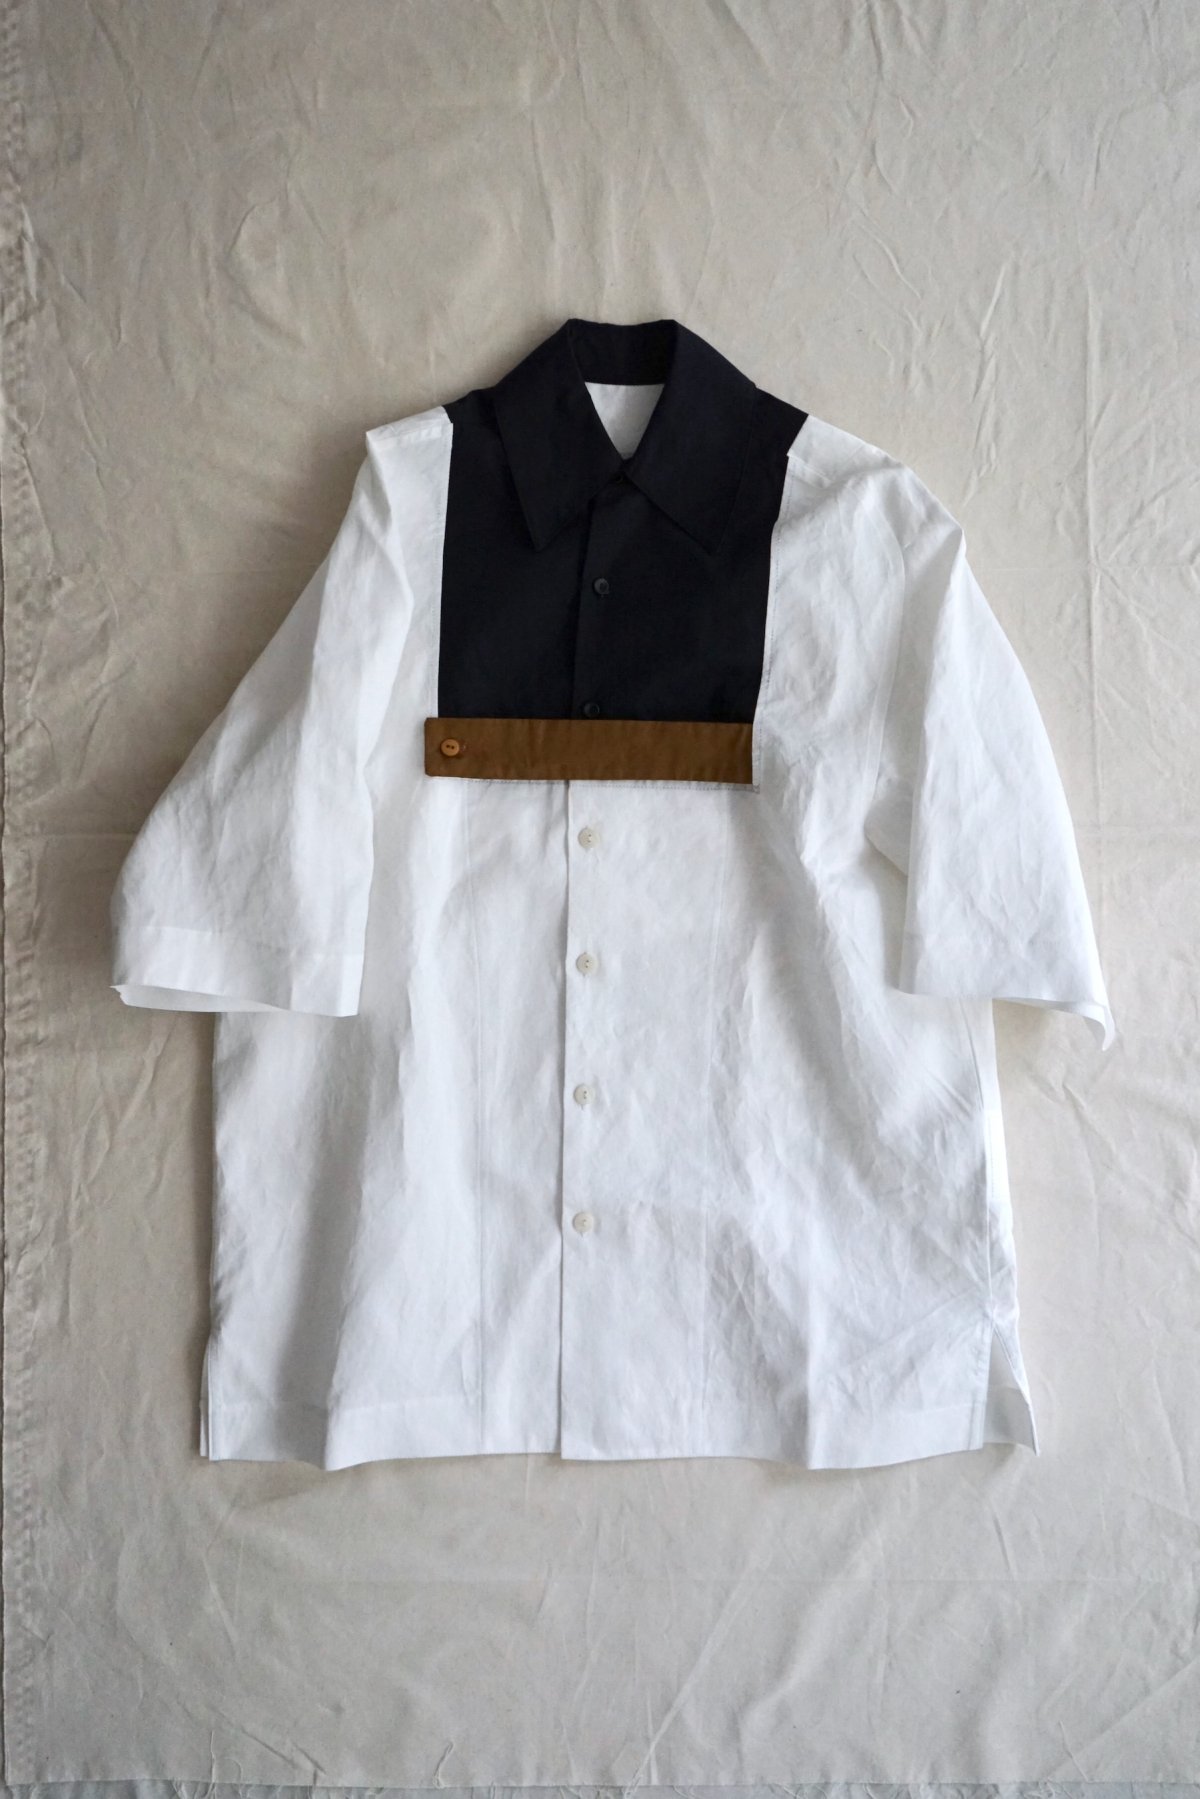 MAI GIDAH / Raglan sleeve Shortsleeve shirt with contrast square insert and belt / White,navy,ochre